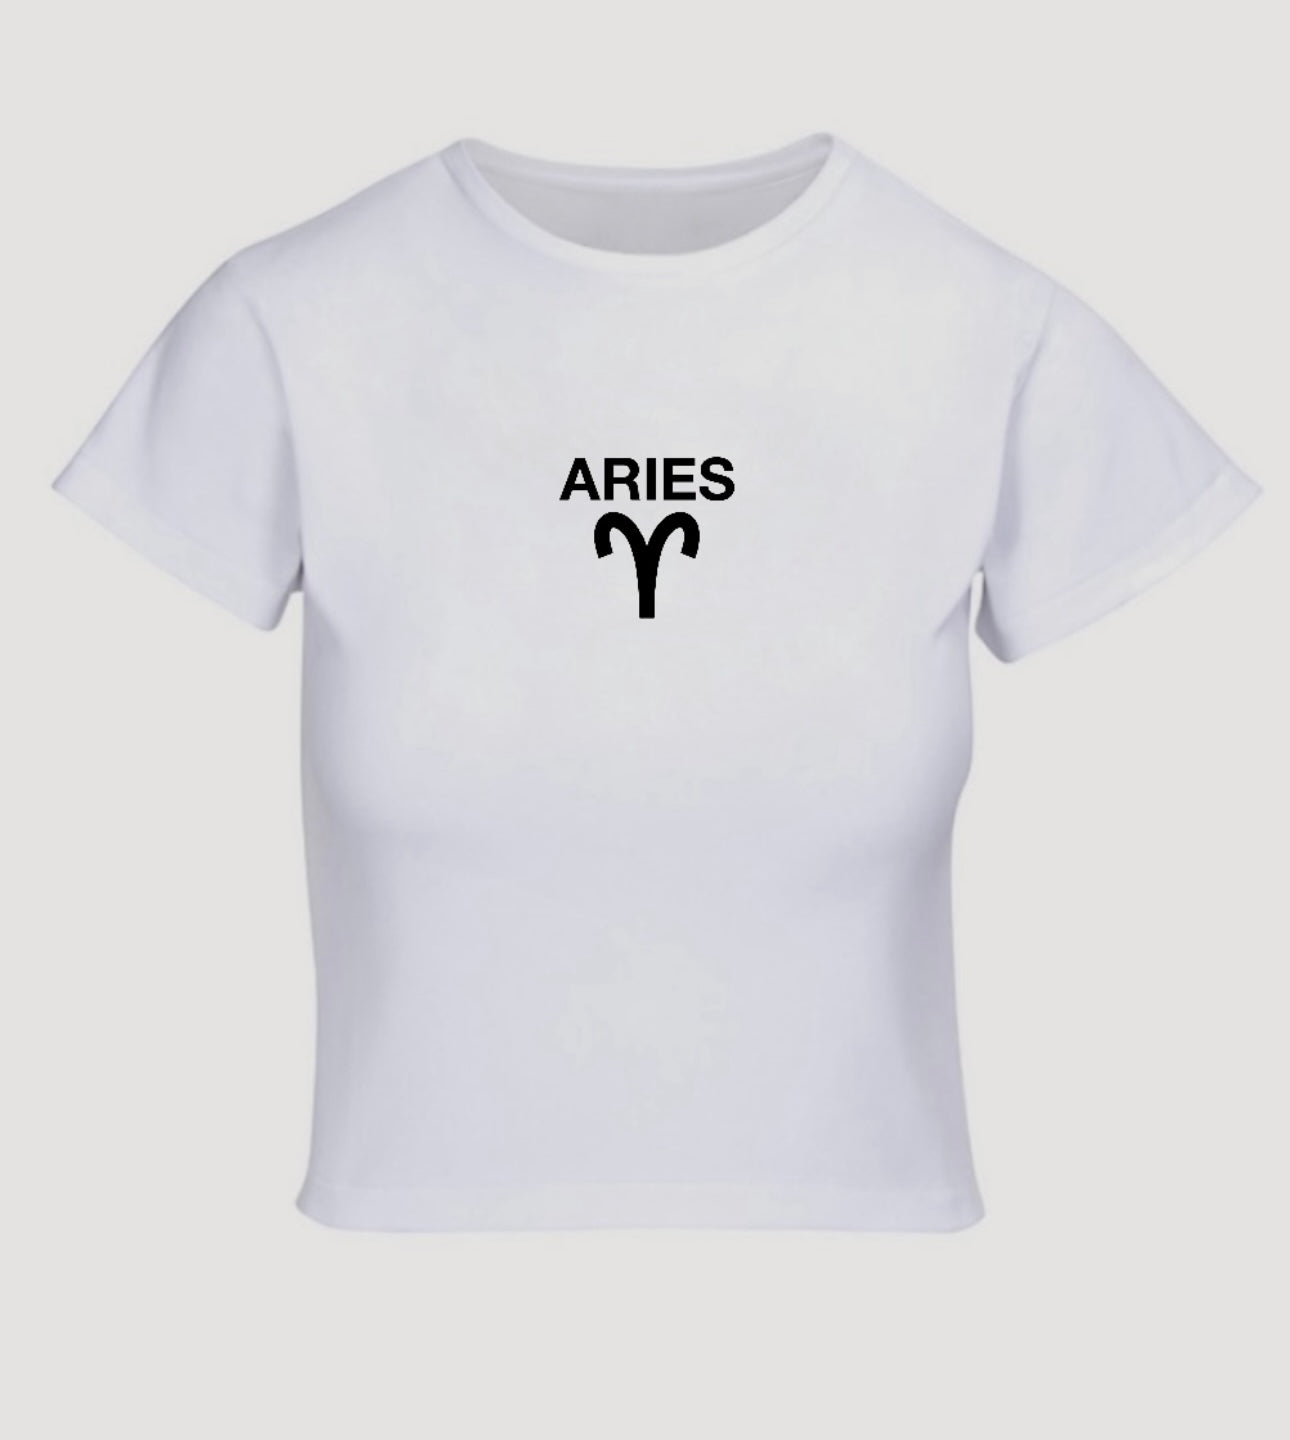 Aries crop top